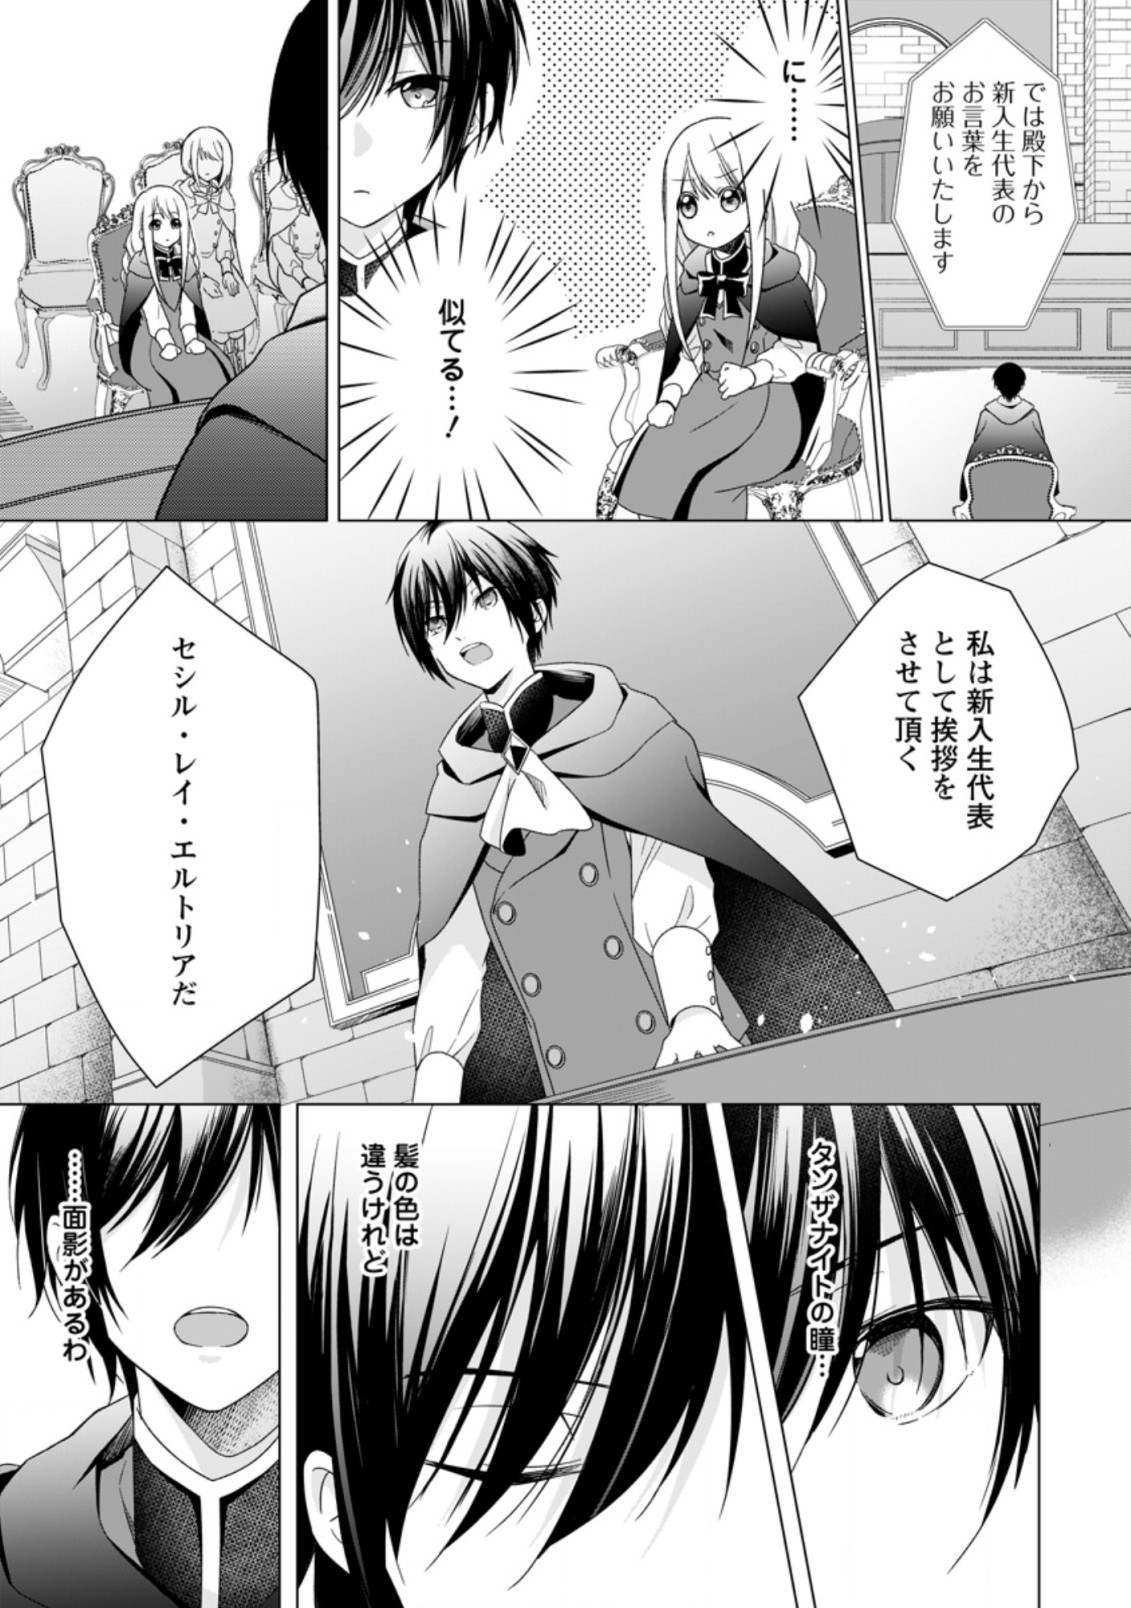 Zense Seijo wa Te wo Nukitai Yokiyoki - Chapter 0 - Page 2